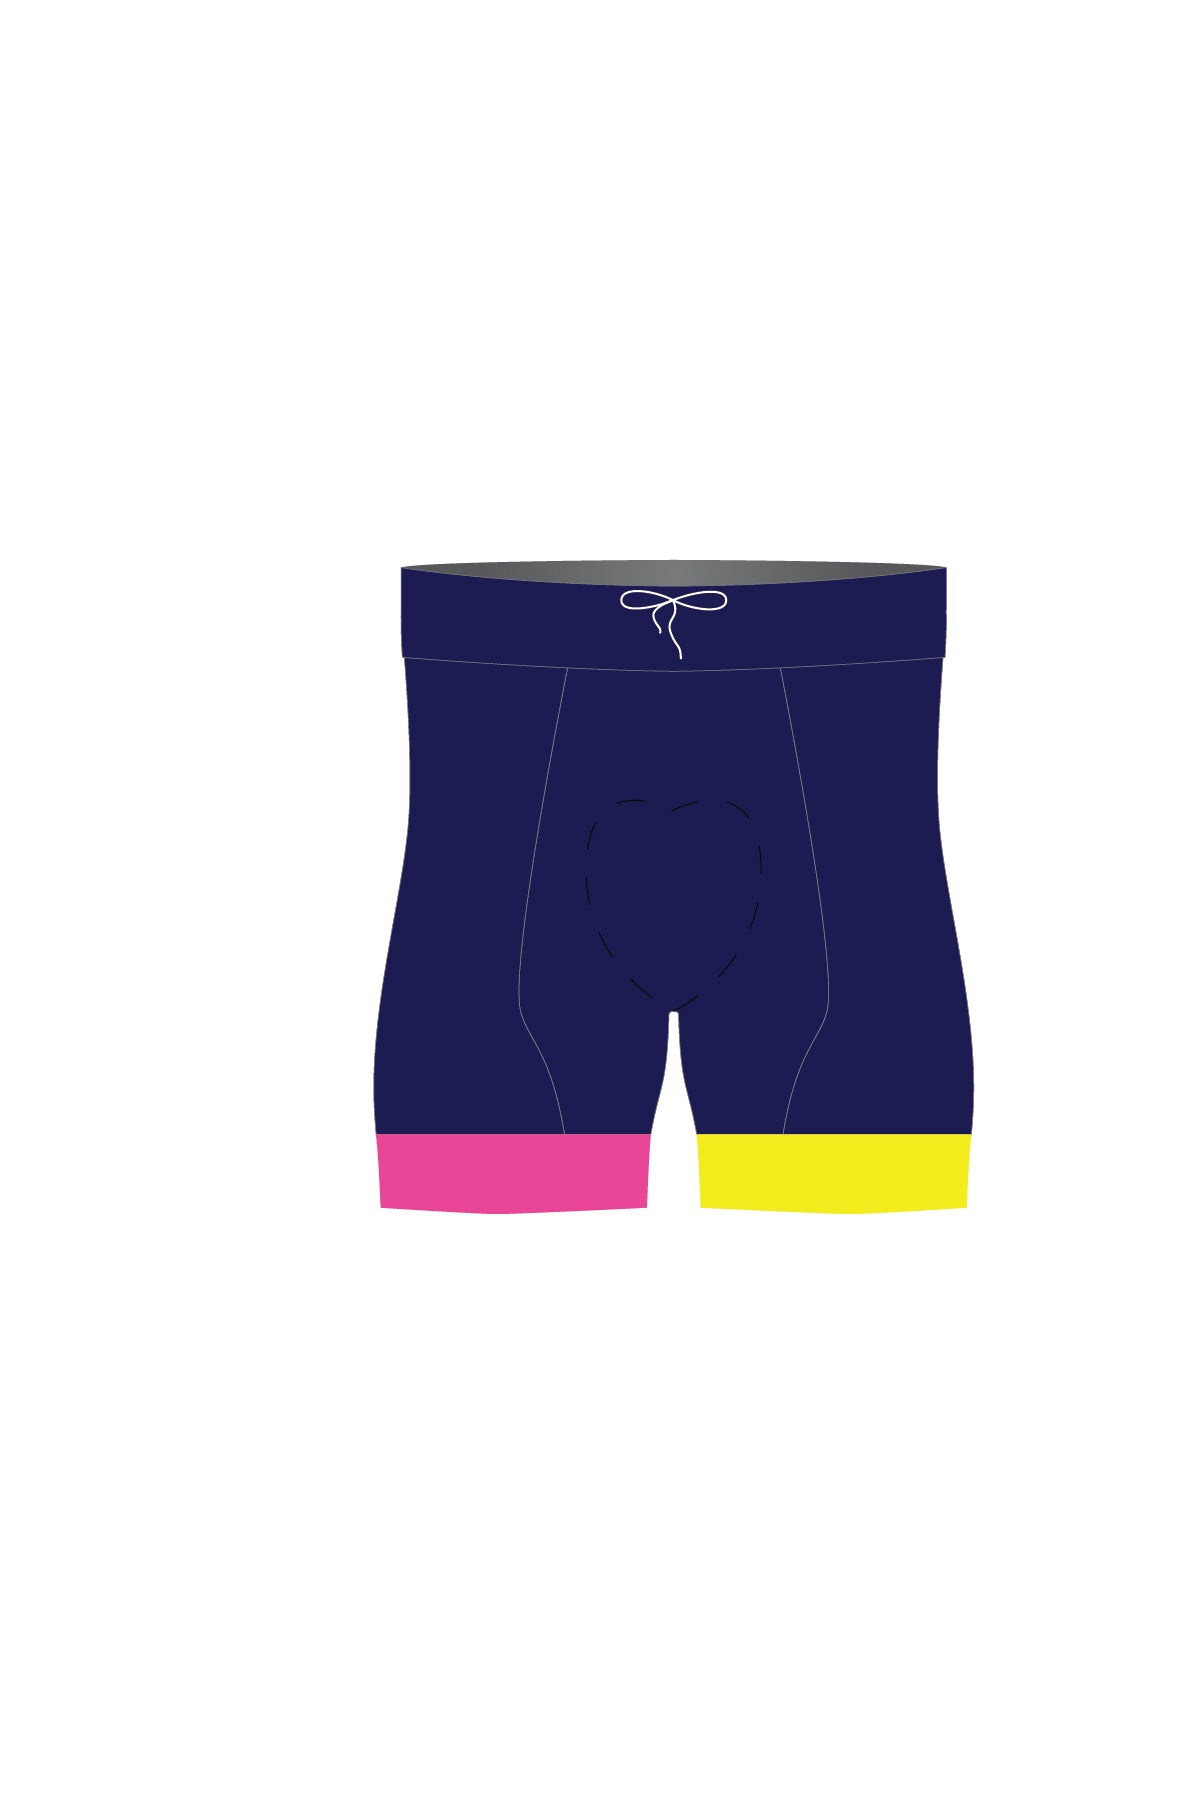 Women's WTC Tri Shorts